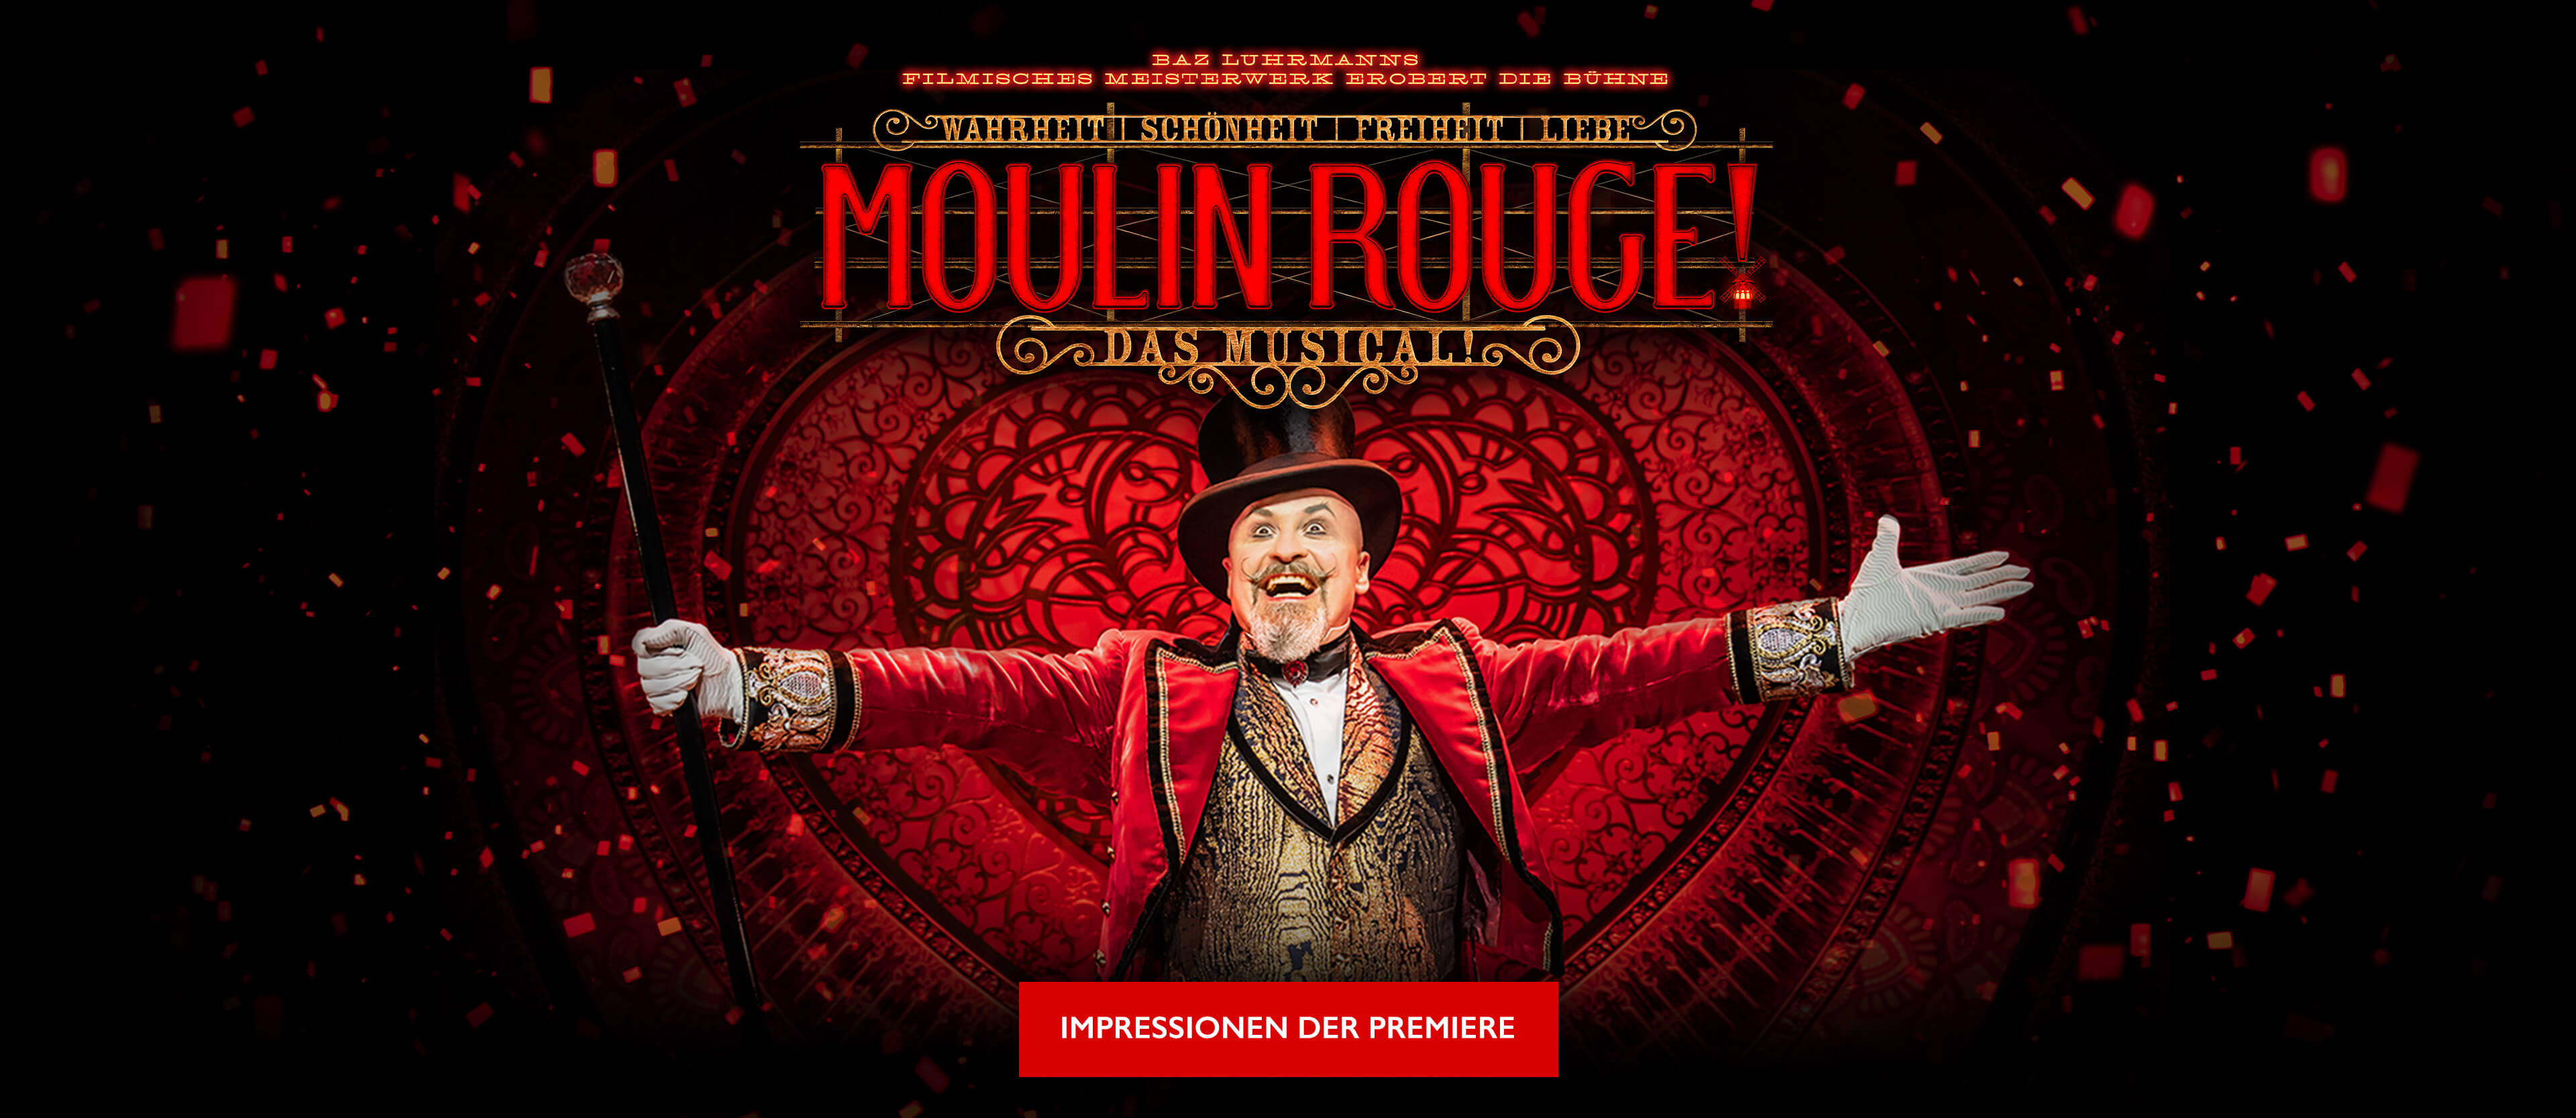 Moulin Rouge! Das Musical